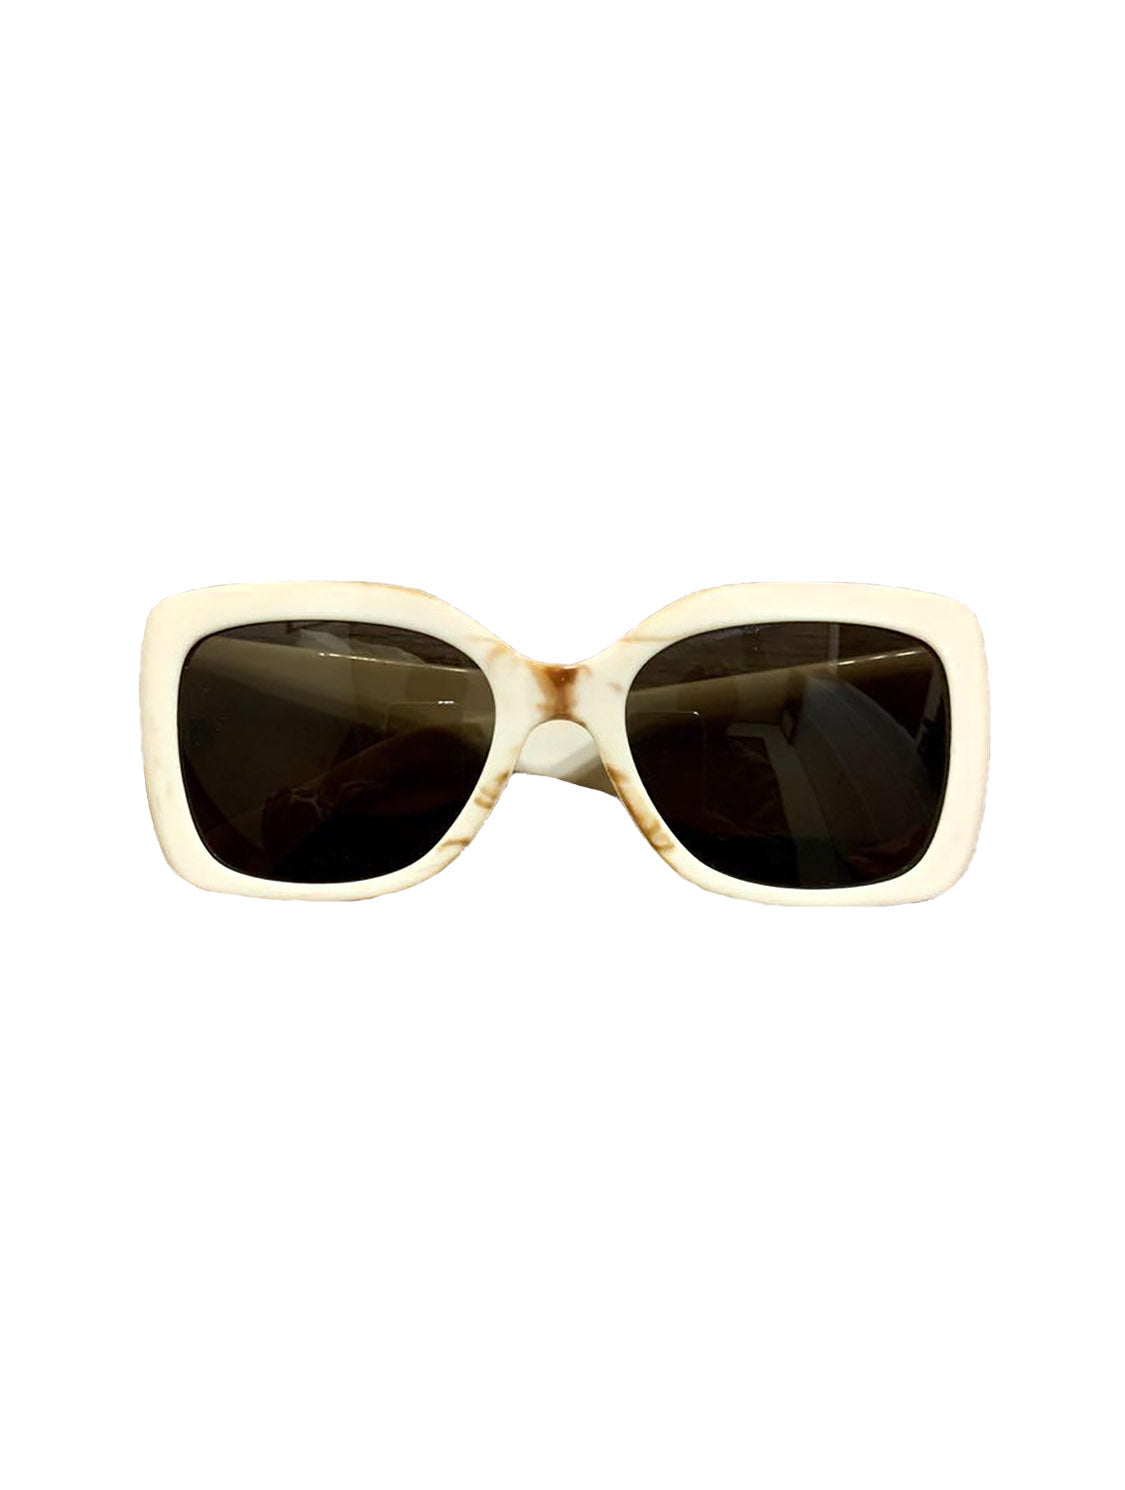 Oversized Square Sunglasses in Cream